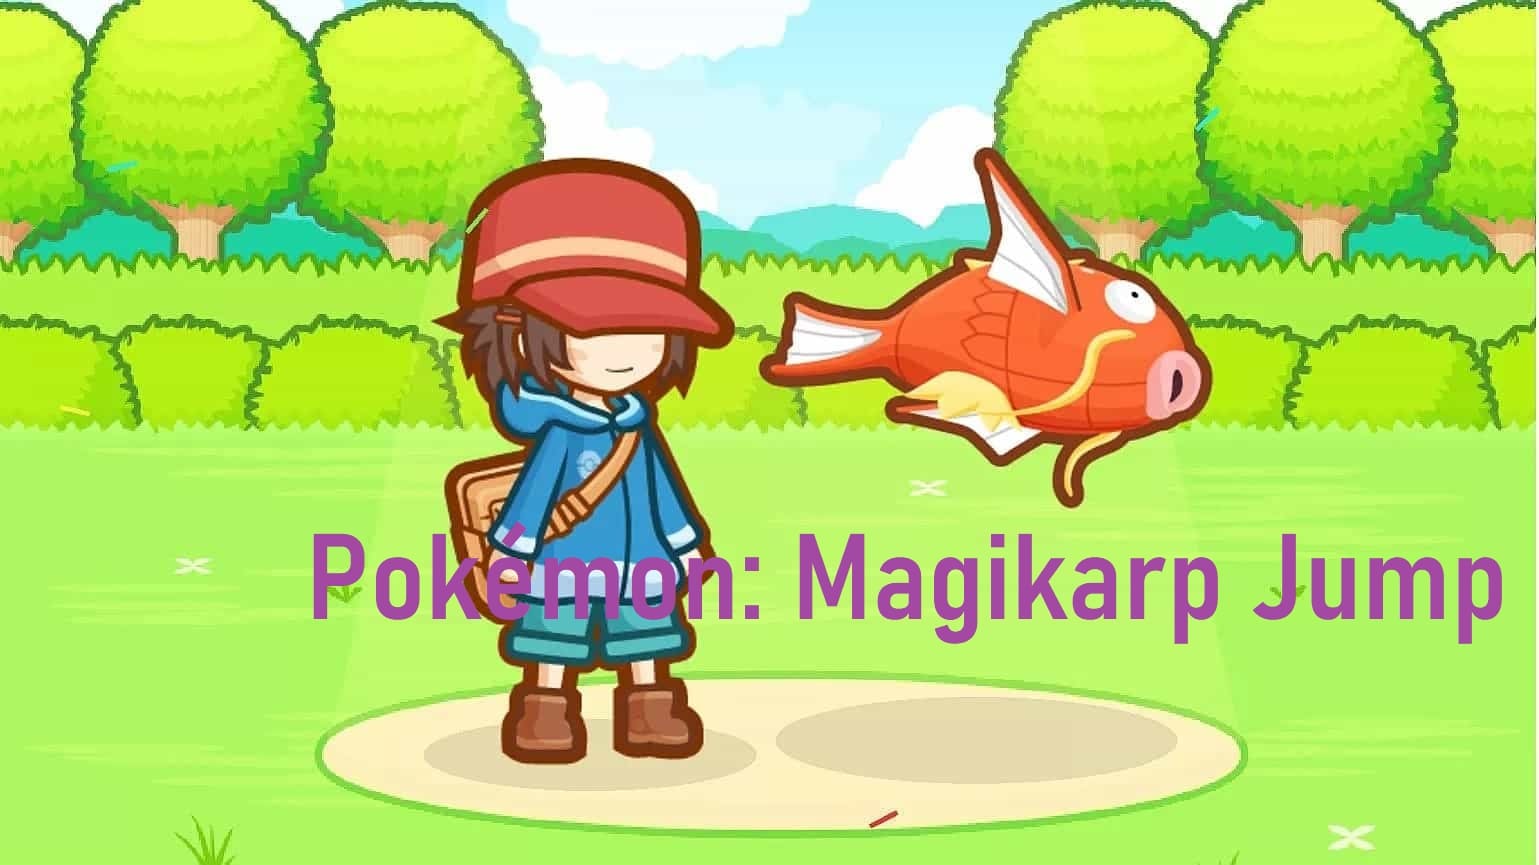 Pokémon: Magikarp Jump 1.3.11 APK MOD [Huge Amount Of Money]